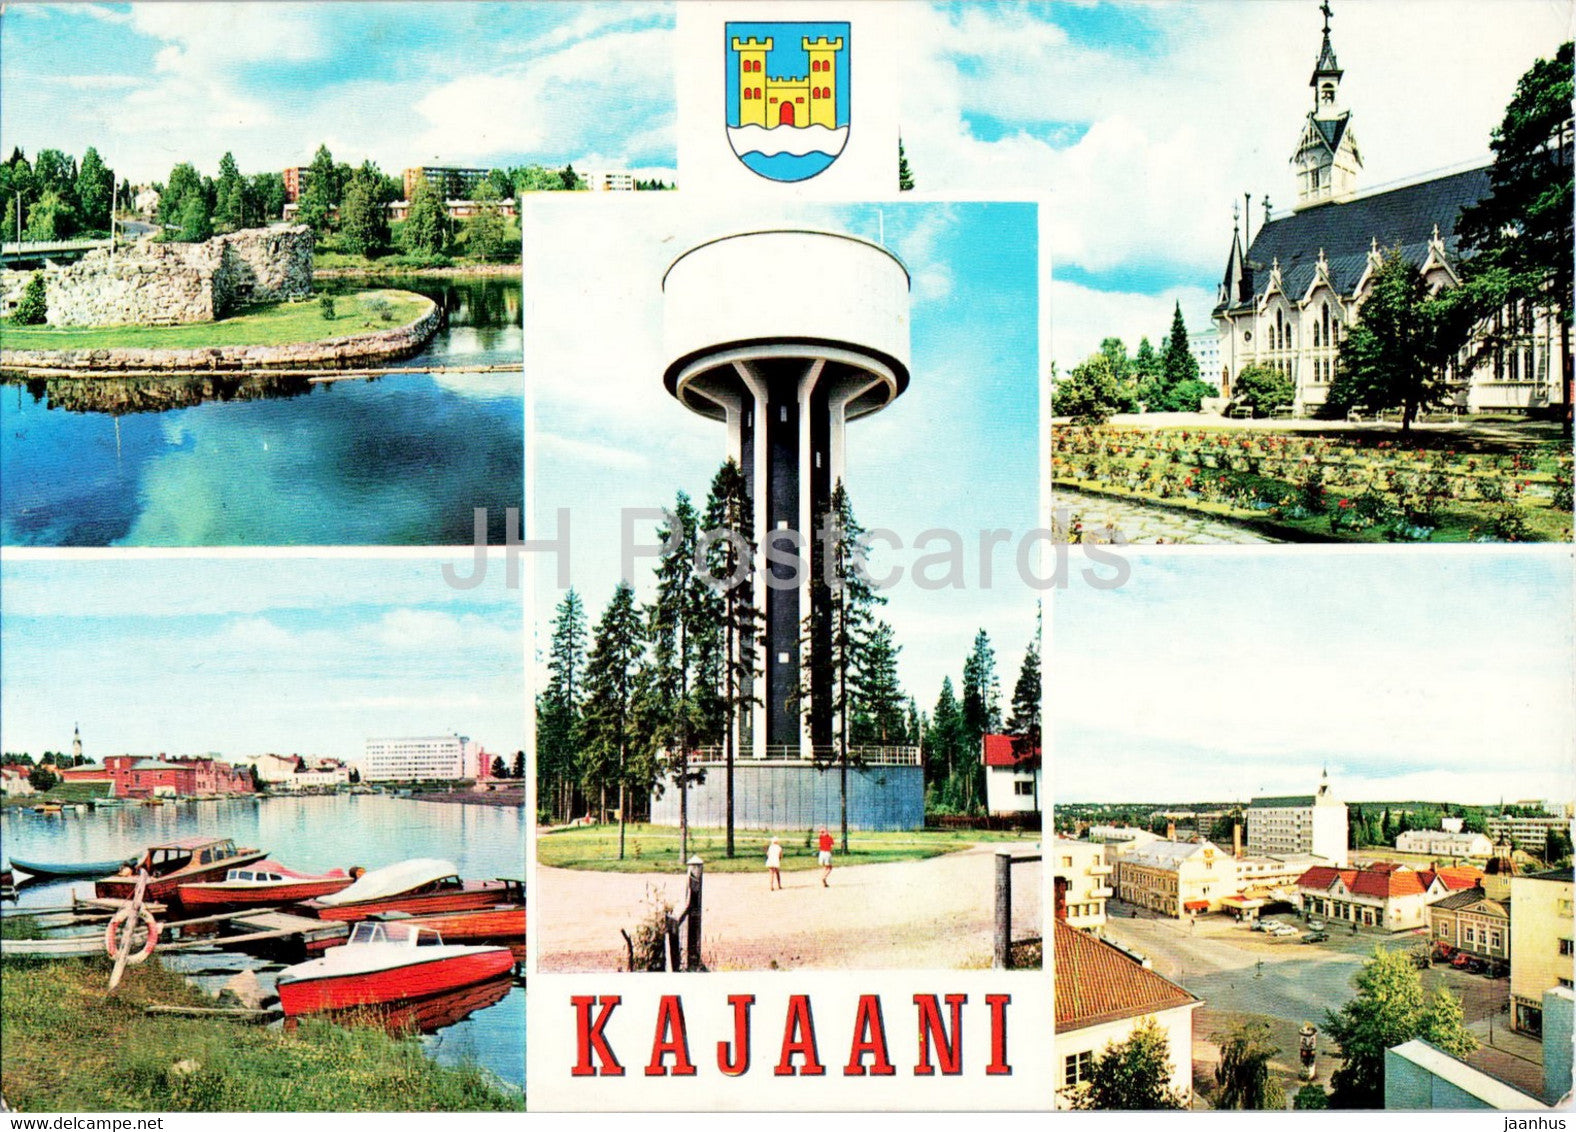 Kajaani - town views - boat - 1967 - Finland - used - JH Postcards